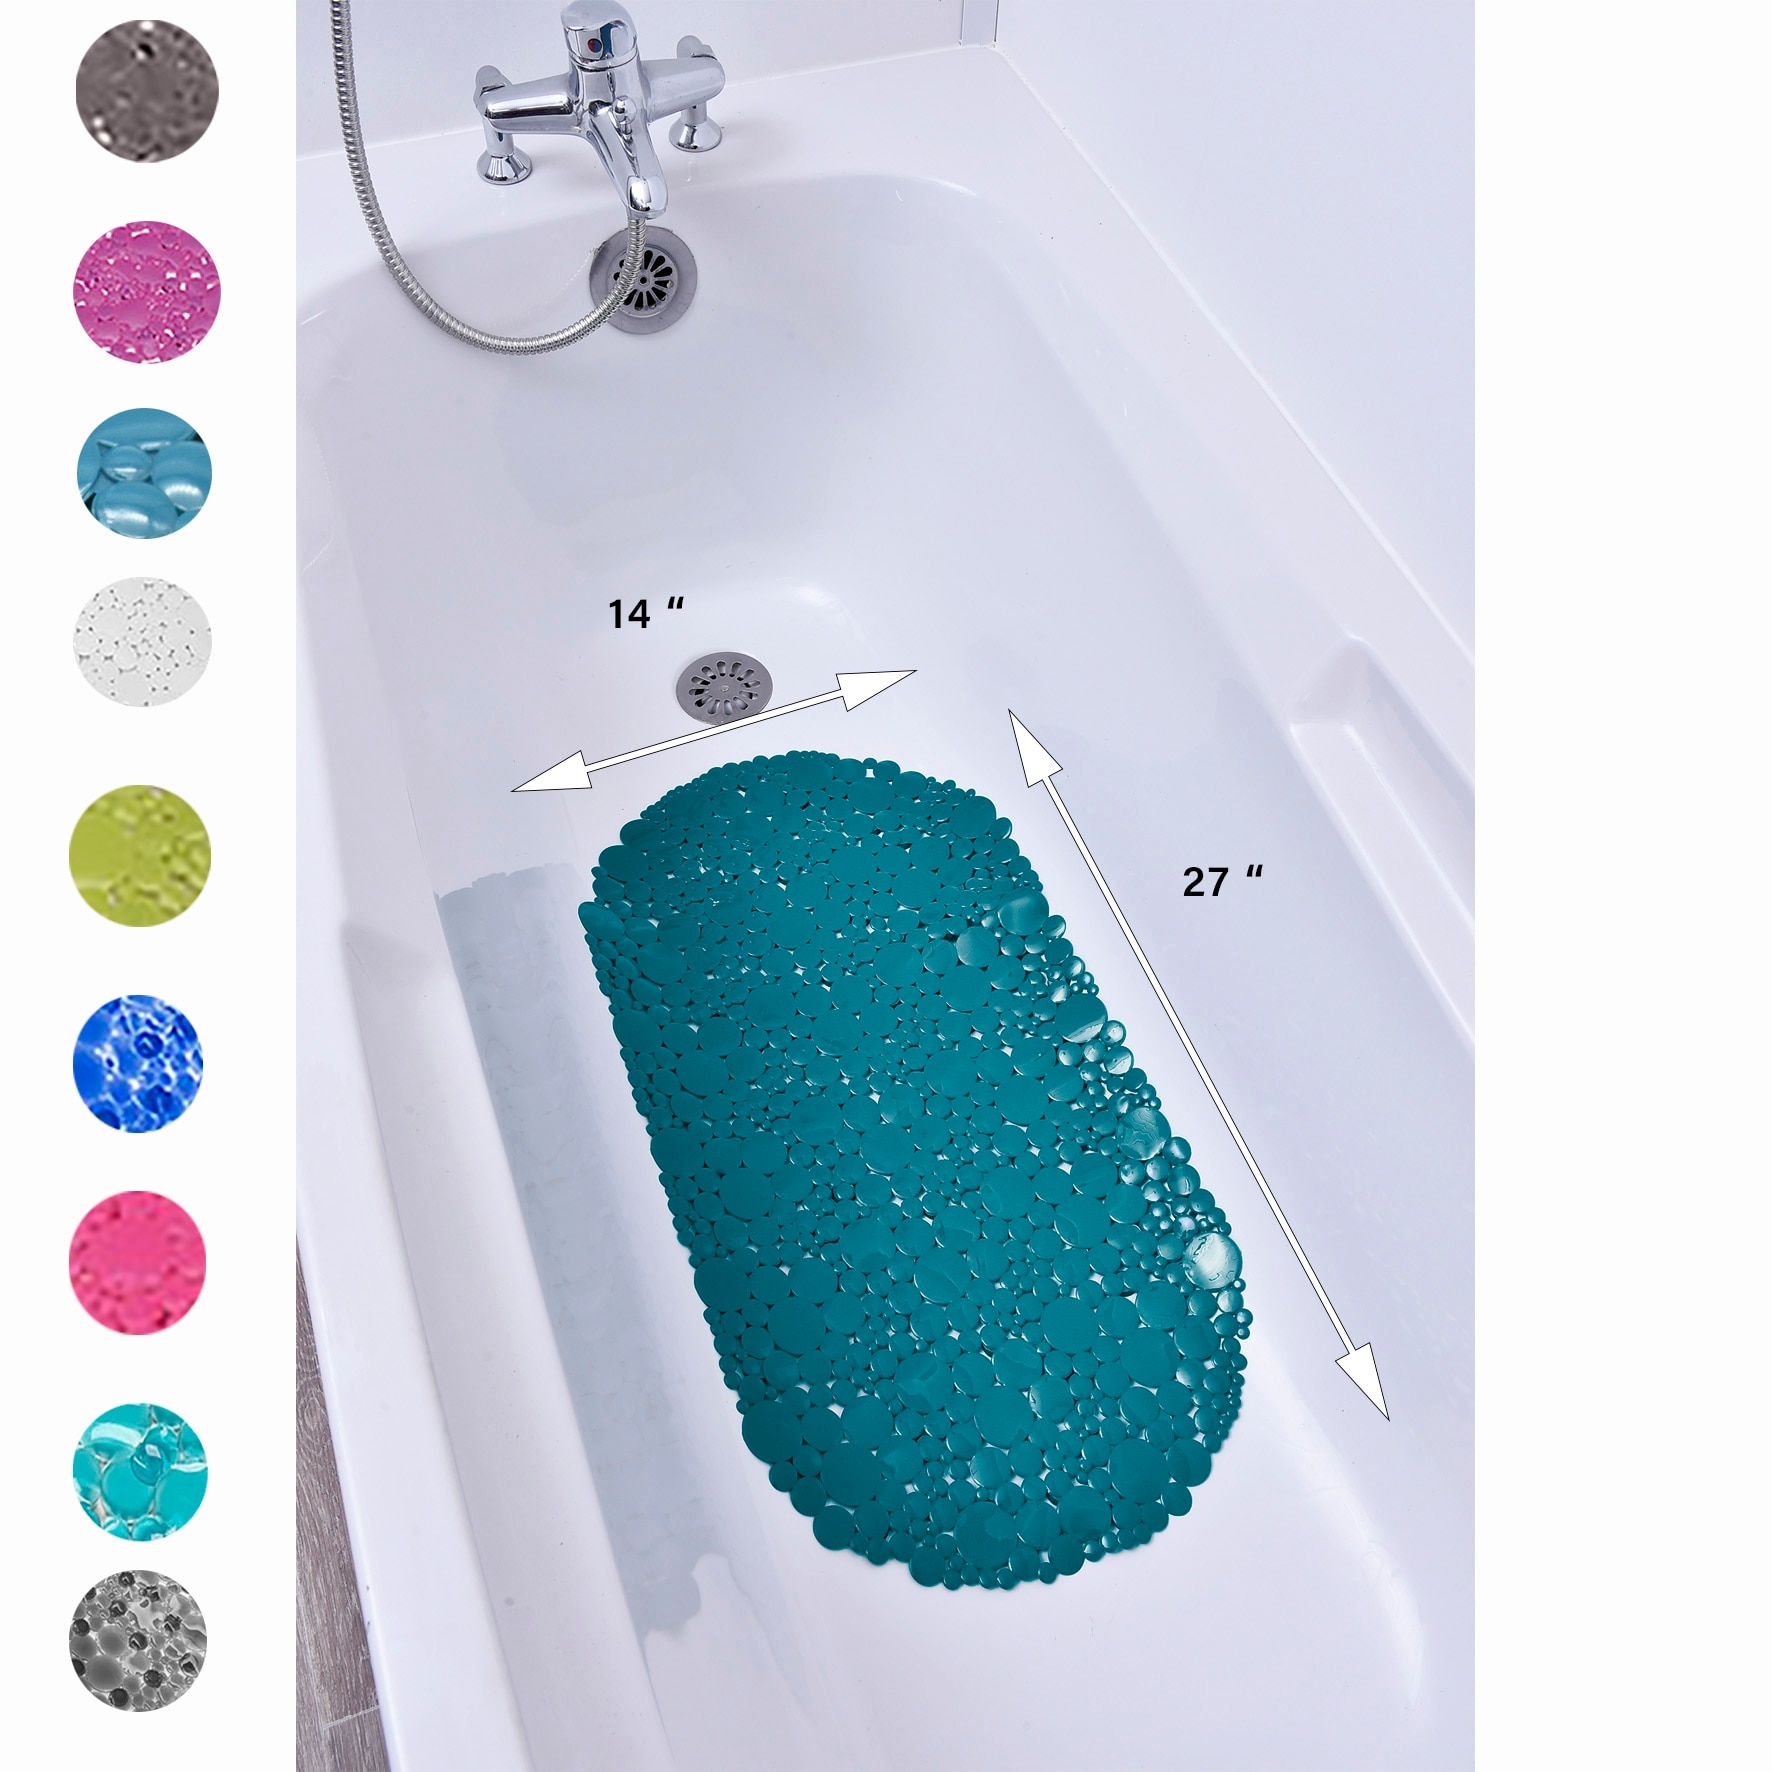 Bubbles Non-Slip Oval Bathtub Mat 28 L x 15 W - On Sale - Bed Bath